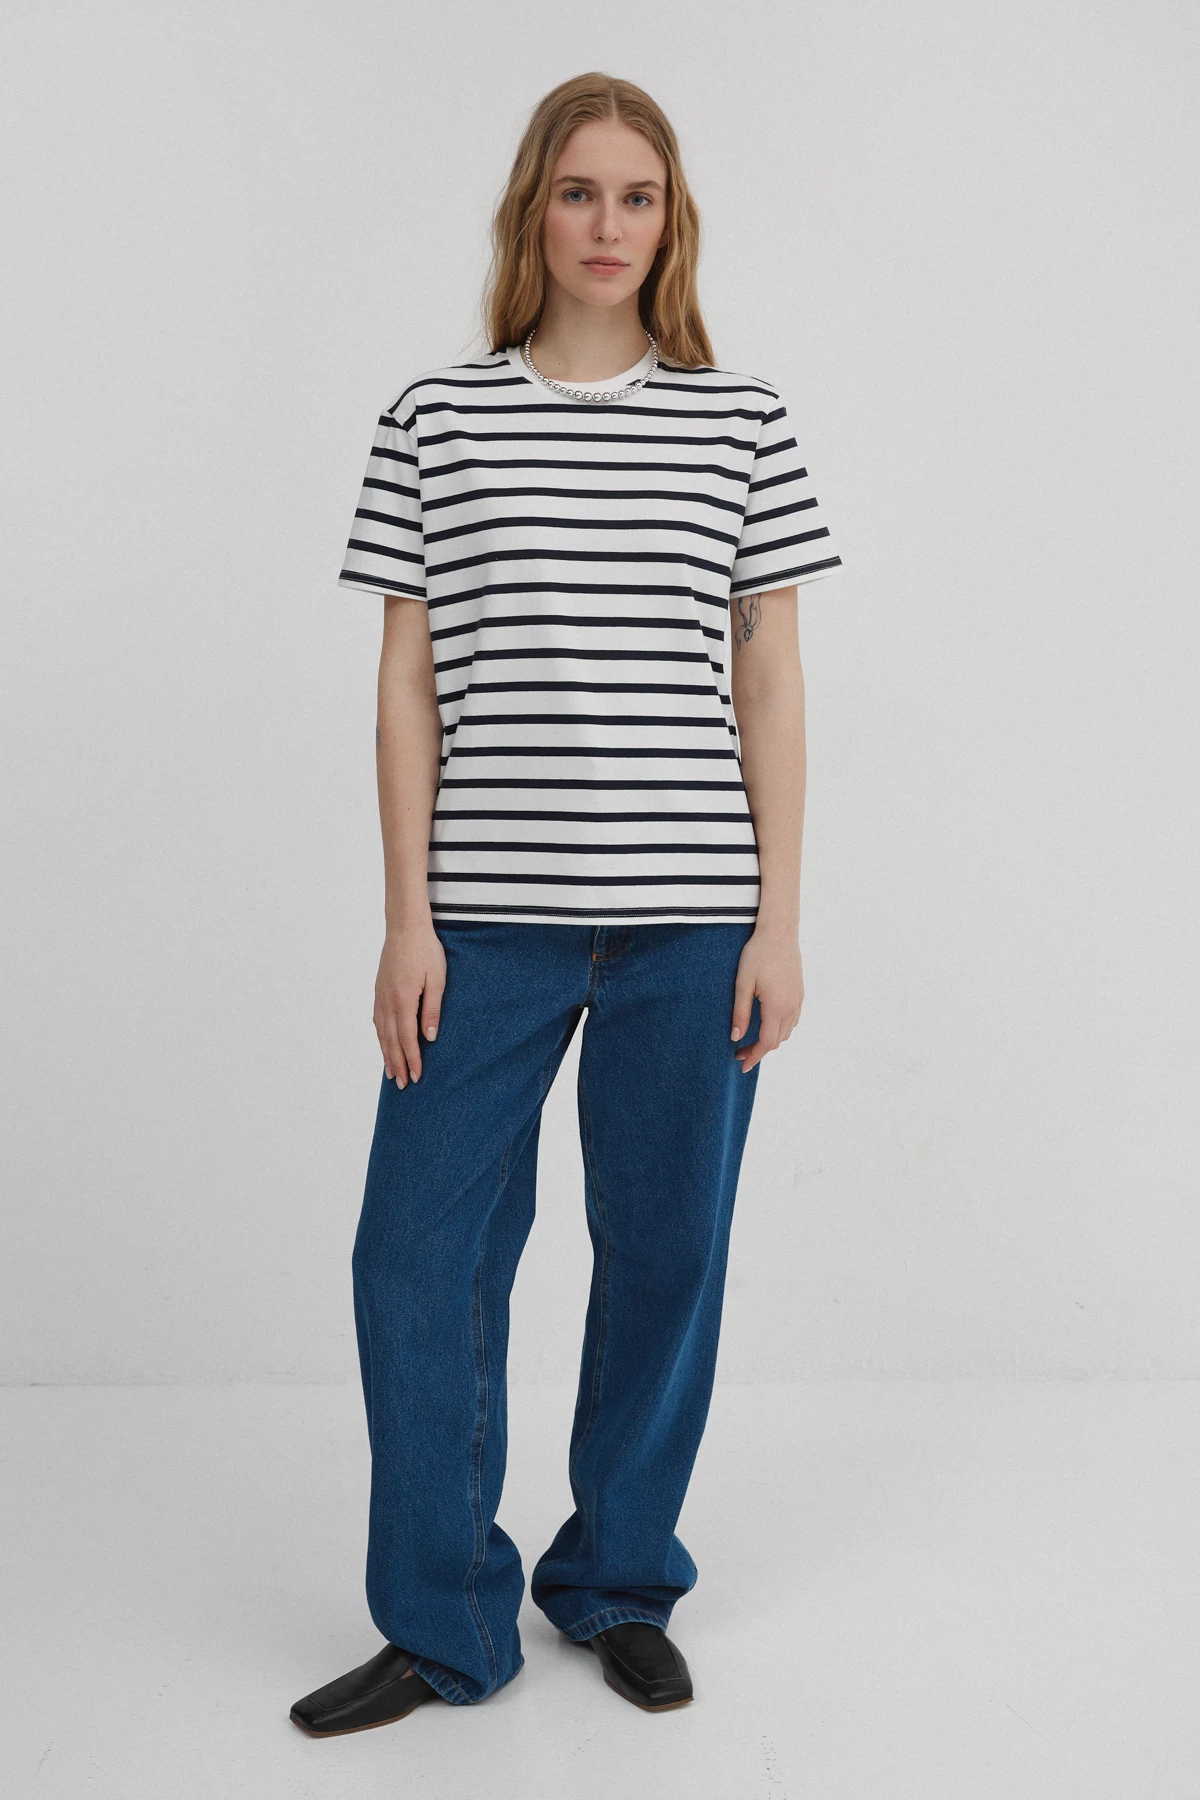 Milky T-shirt in a dark blue stripe with cotton, photo 2